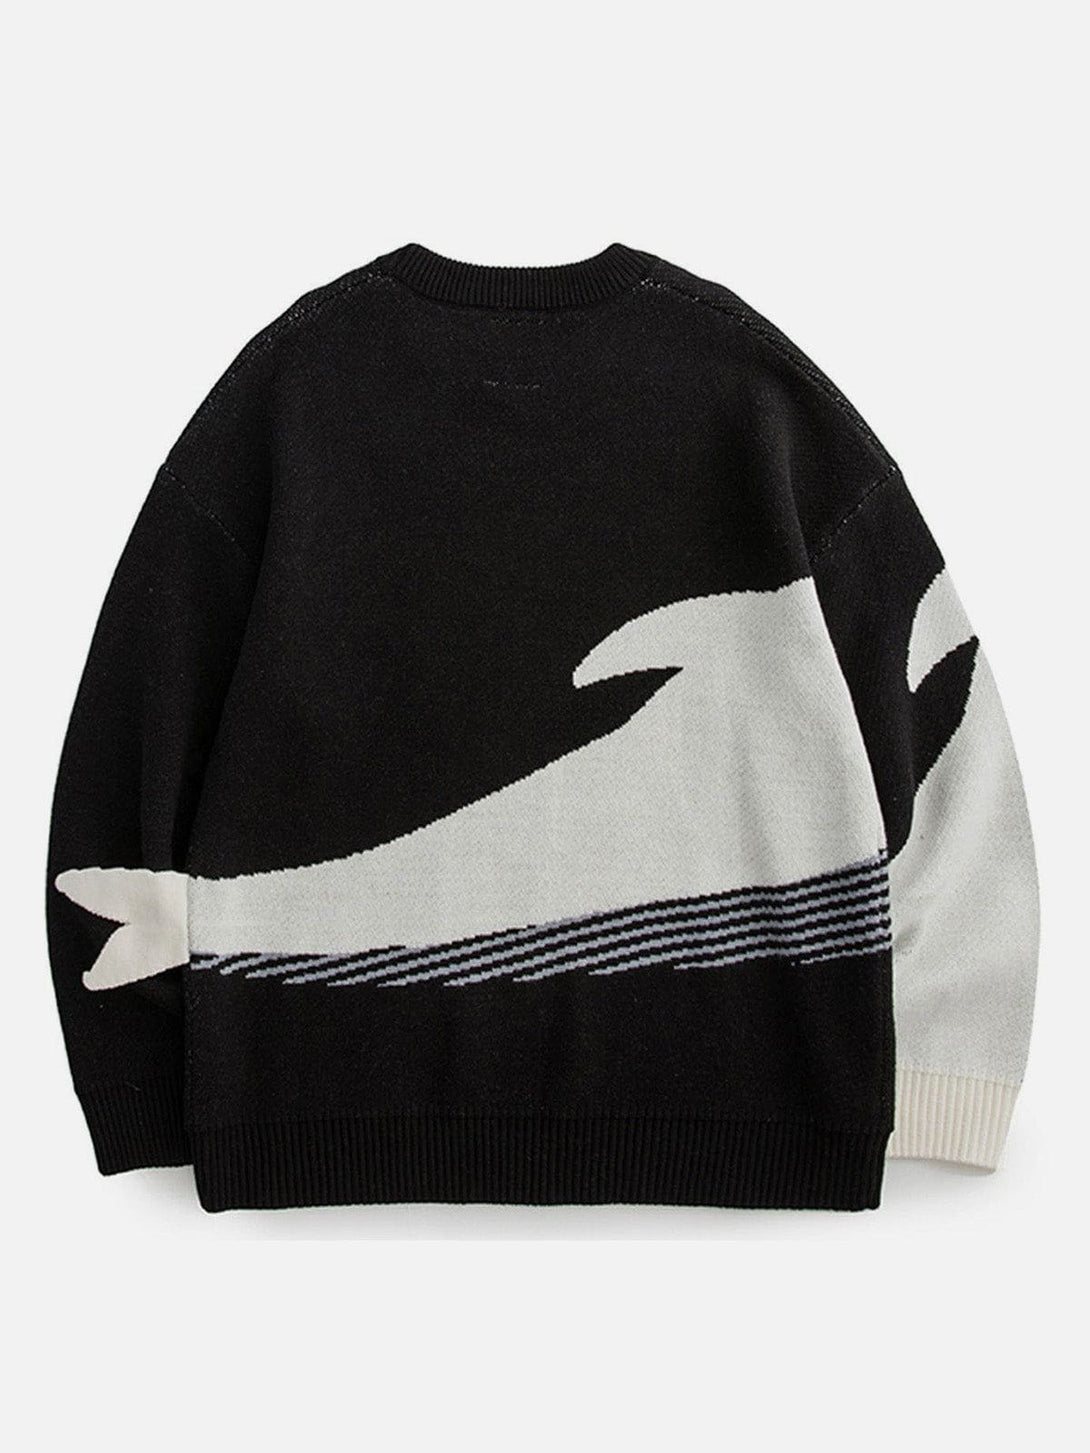 AlanBalen® - The Loneliest Whale Knit Sweater AlanBalen